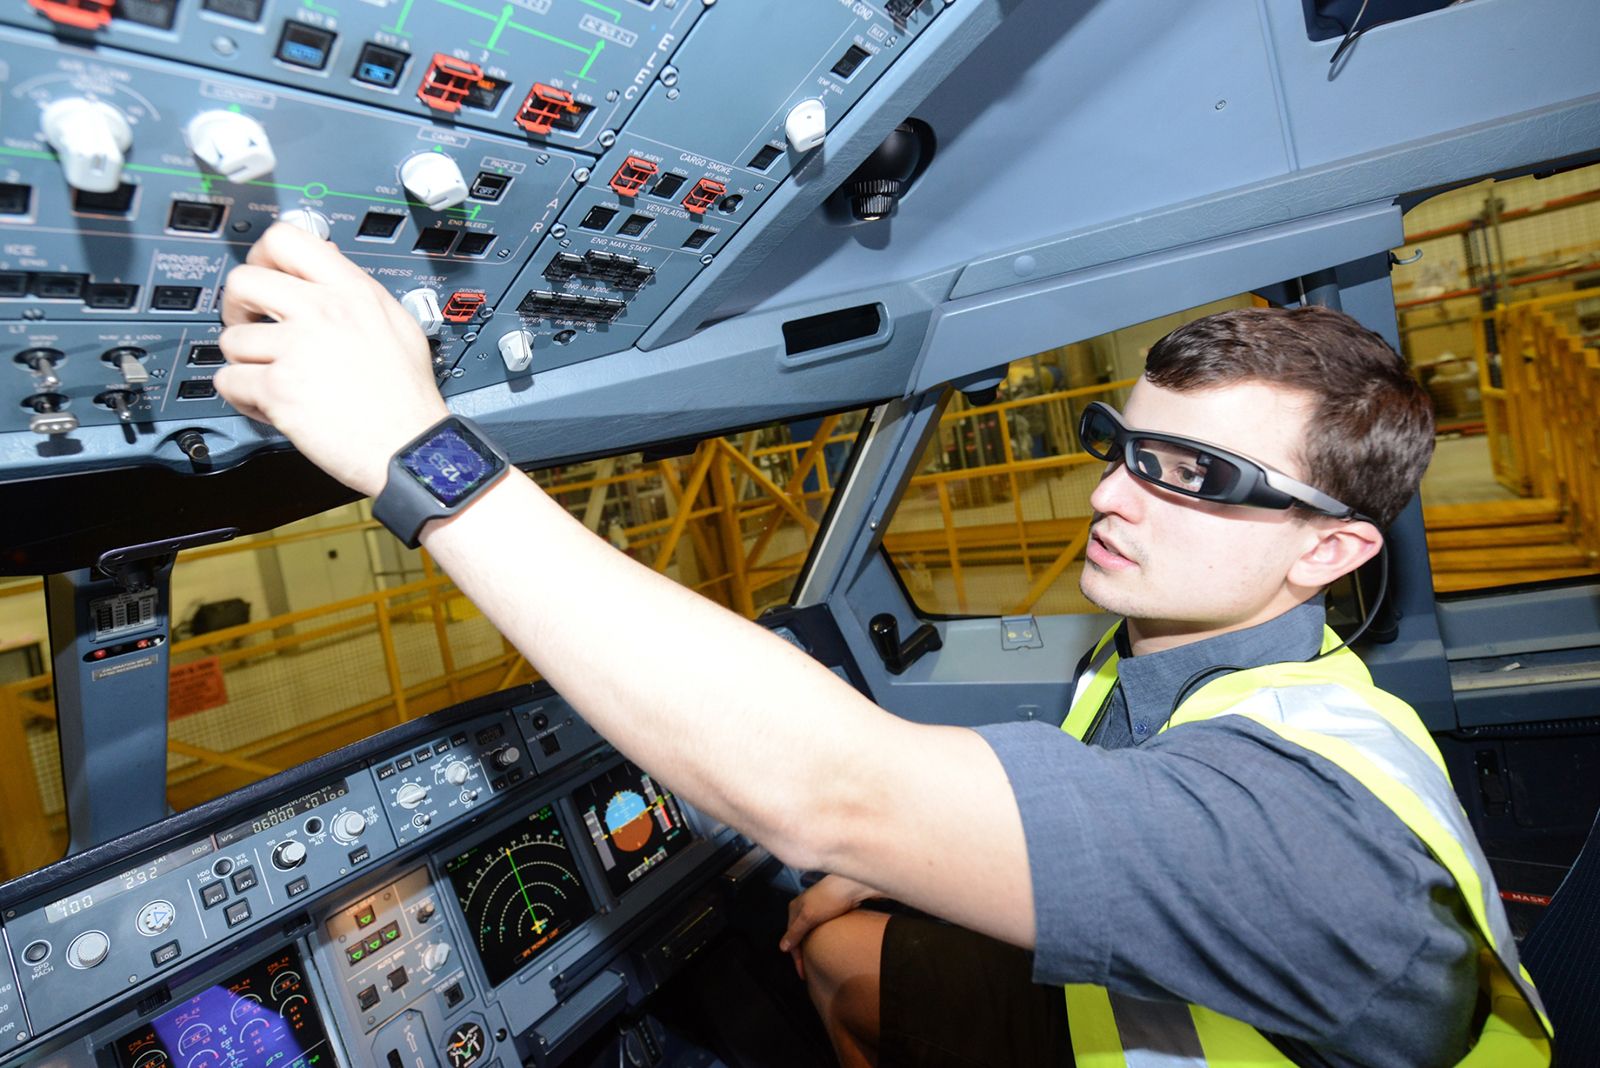 virgin atlantic to make your flights run smoothly using sony smarteyeglass and smartwear image 1